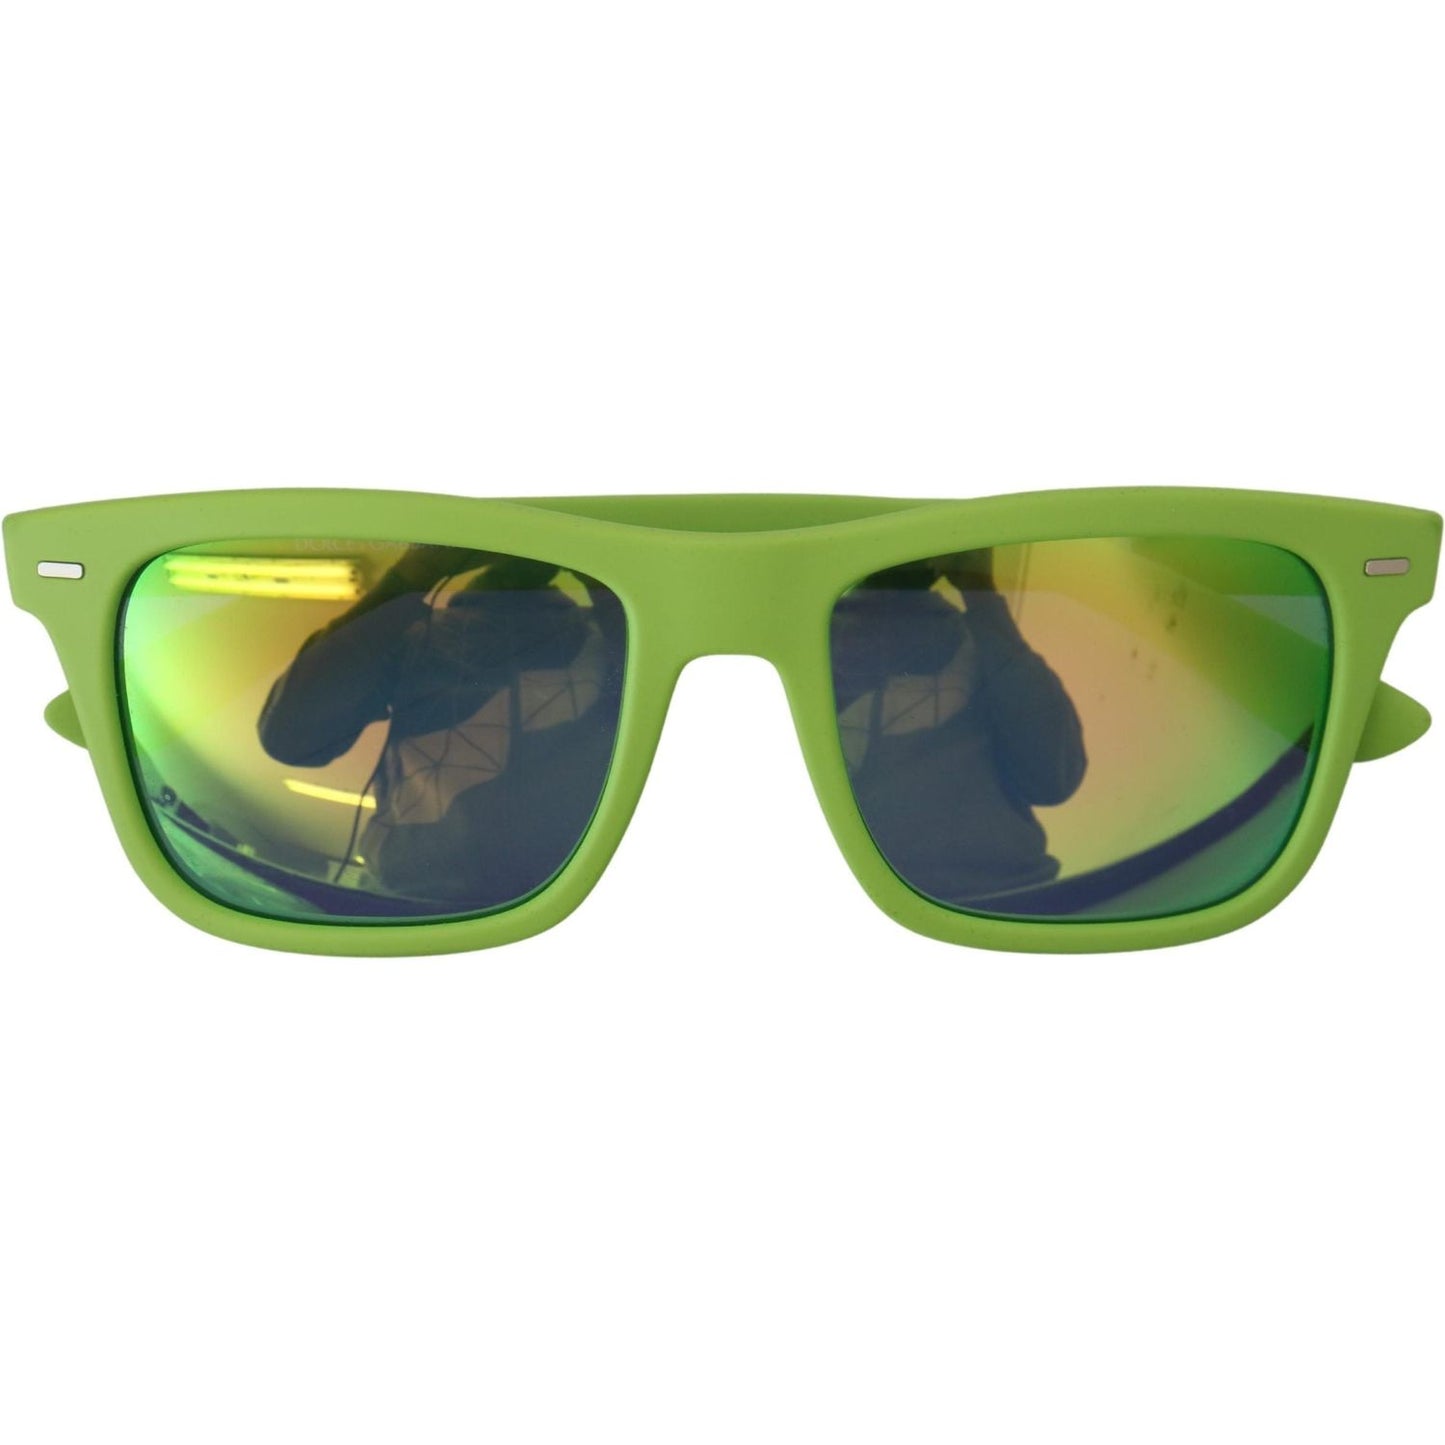 Dolce & Gabbana Acid Green Chic Full Rim Sunglasses green-rubber-full-rim-frame-shades-dg6095-acid-sunglasses IMG_4209-scaled-d09b6ac6-fda.jpg